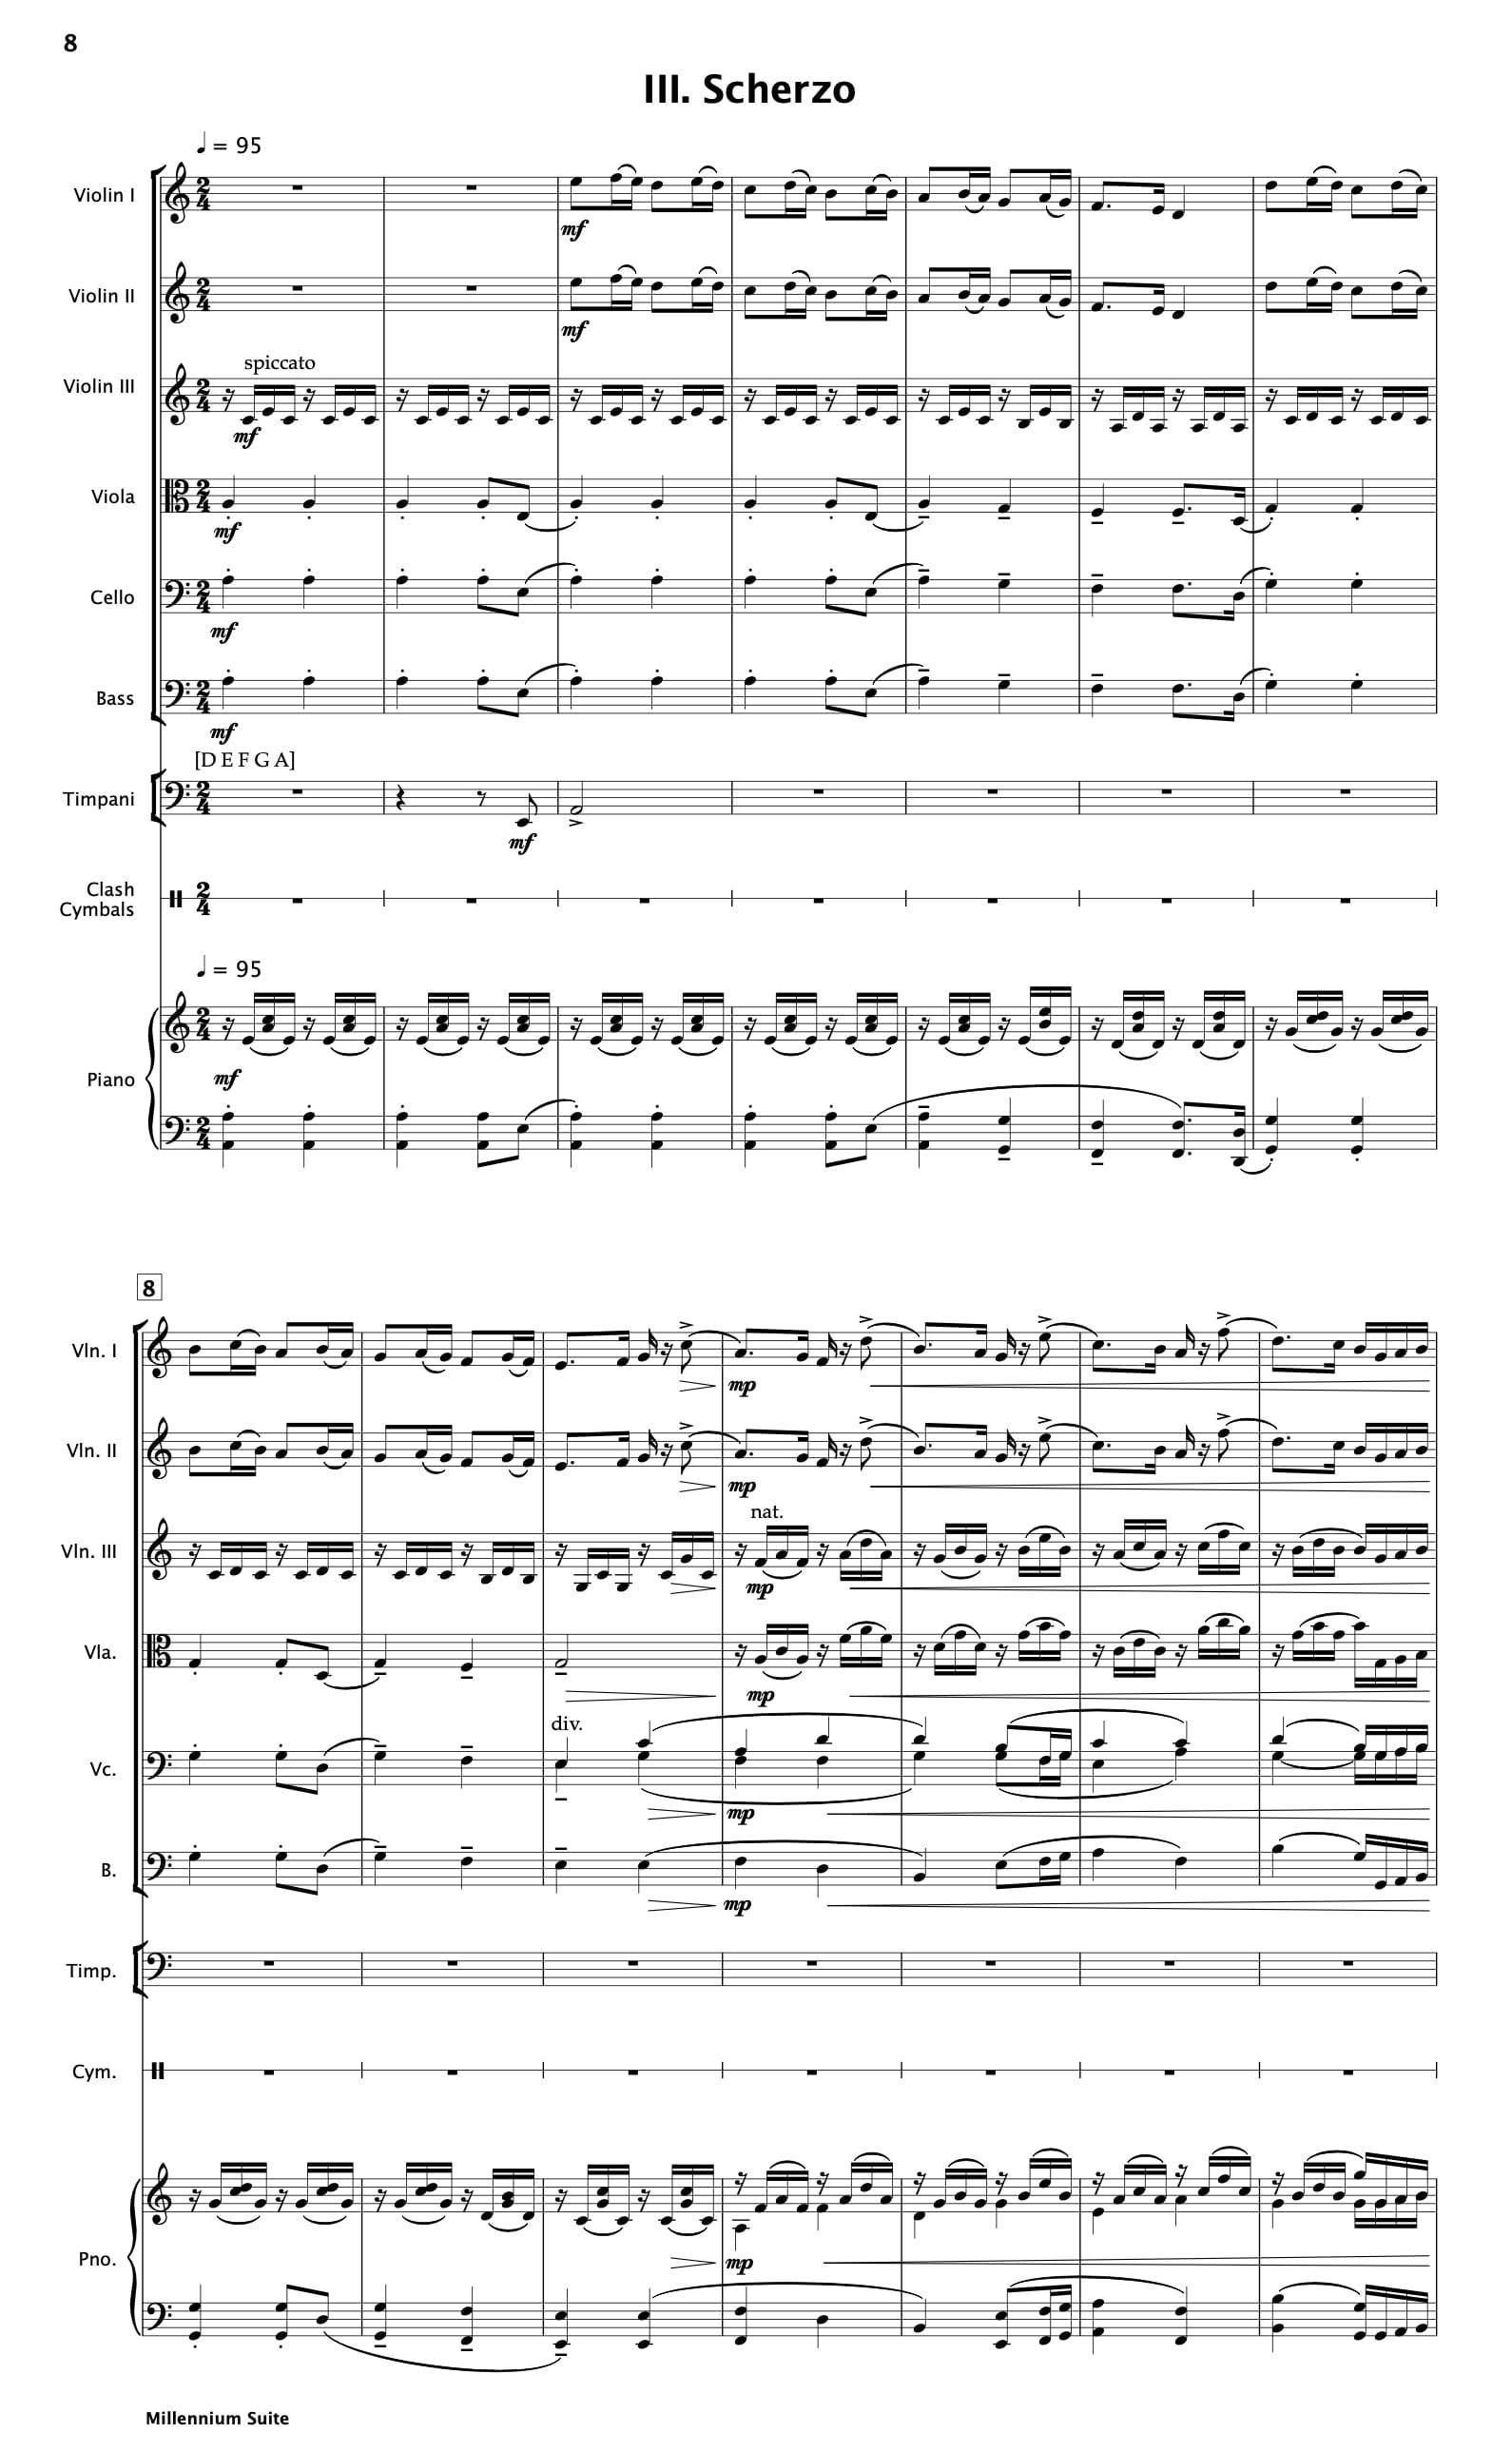 Millennium Suite (String Orchestra Edition 2020) - Paul Barker Music 